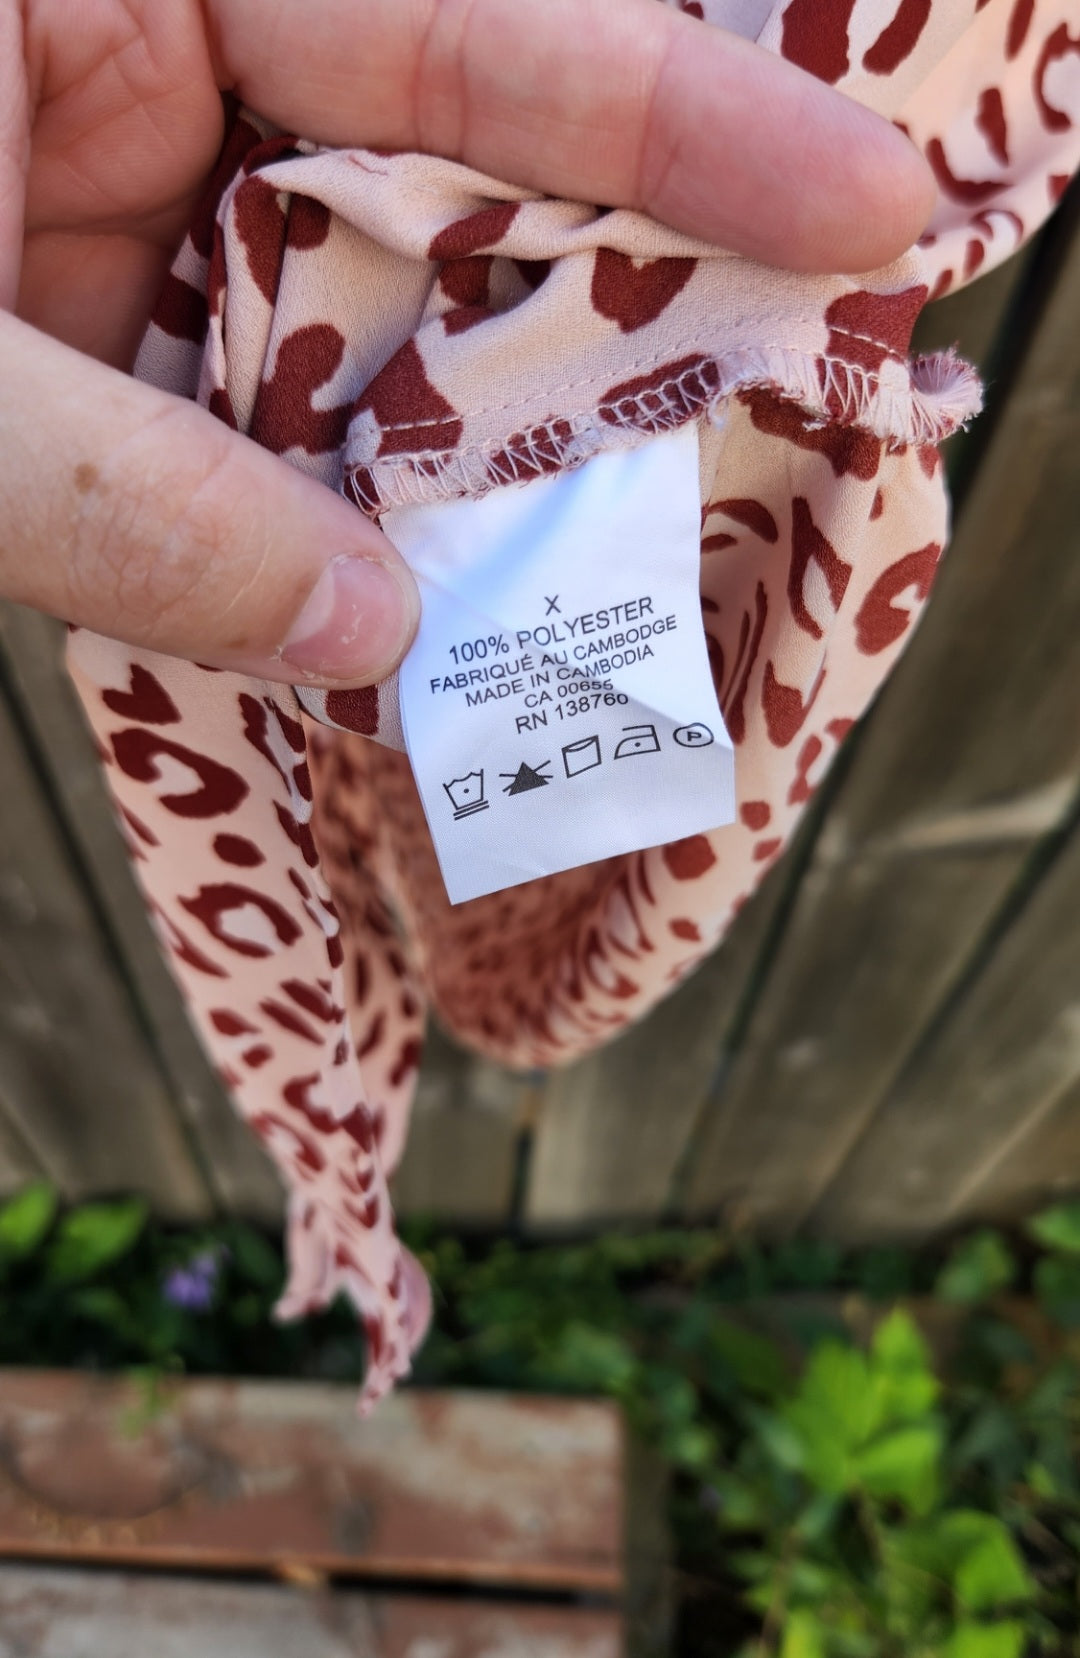 Size 0x Pink Leopard Print Button Up Blouse